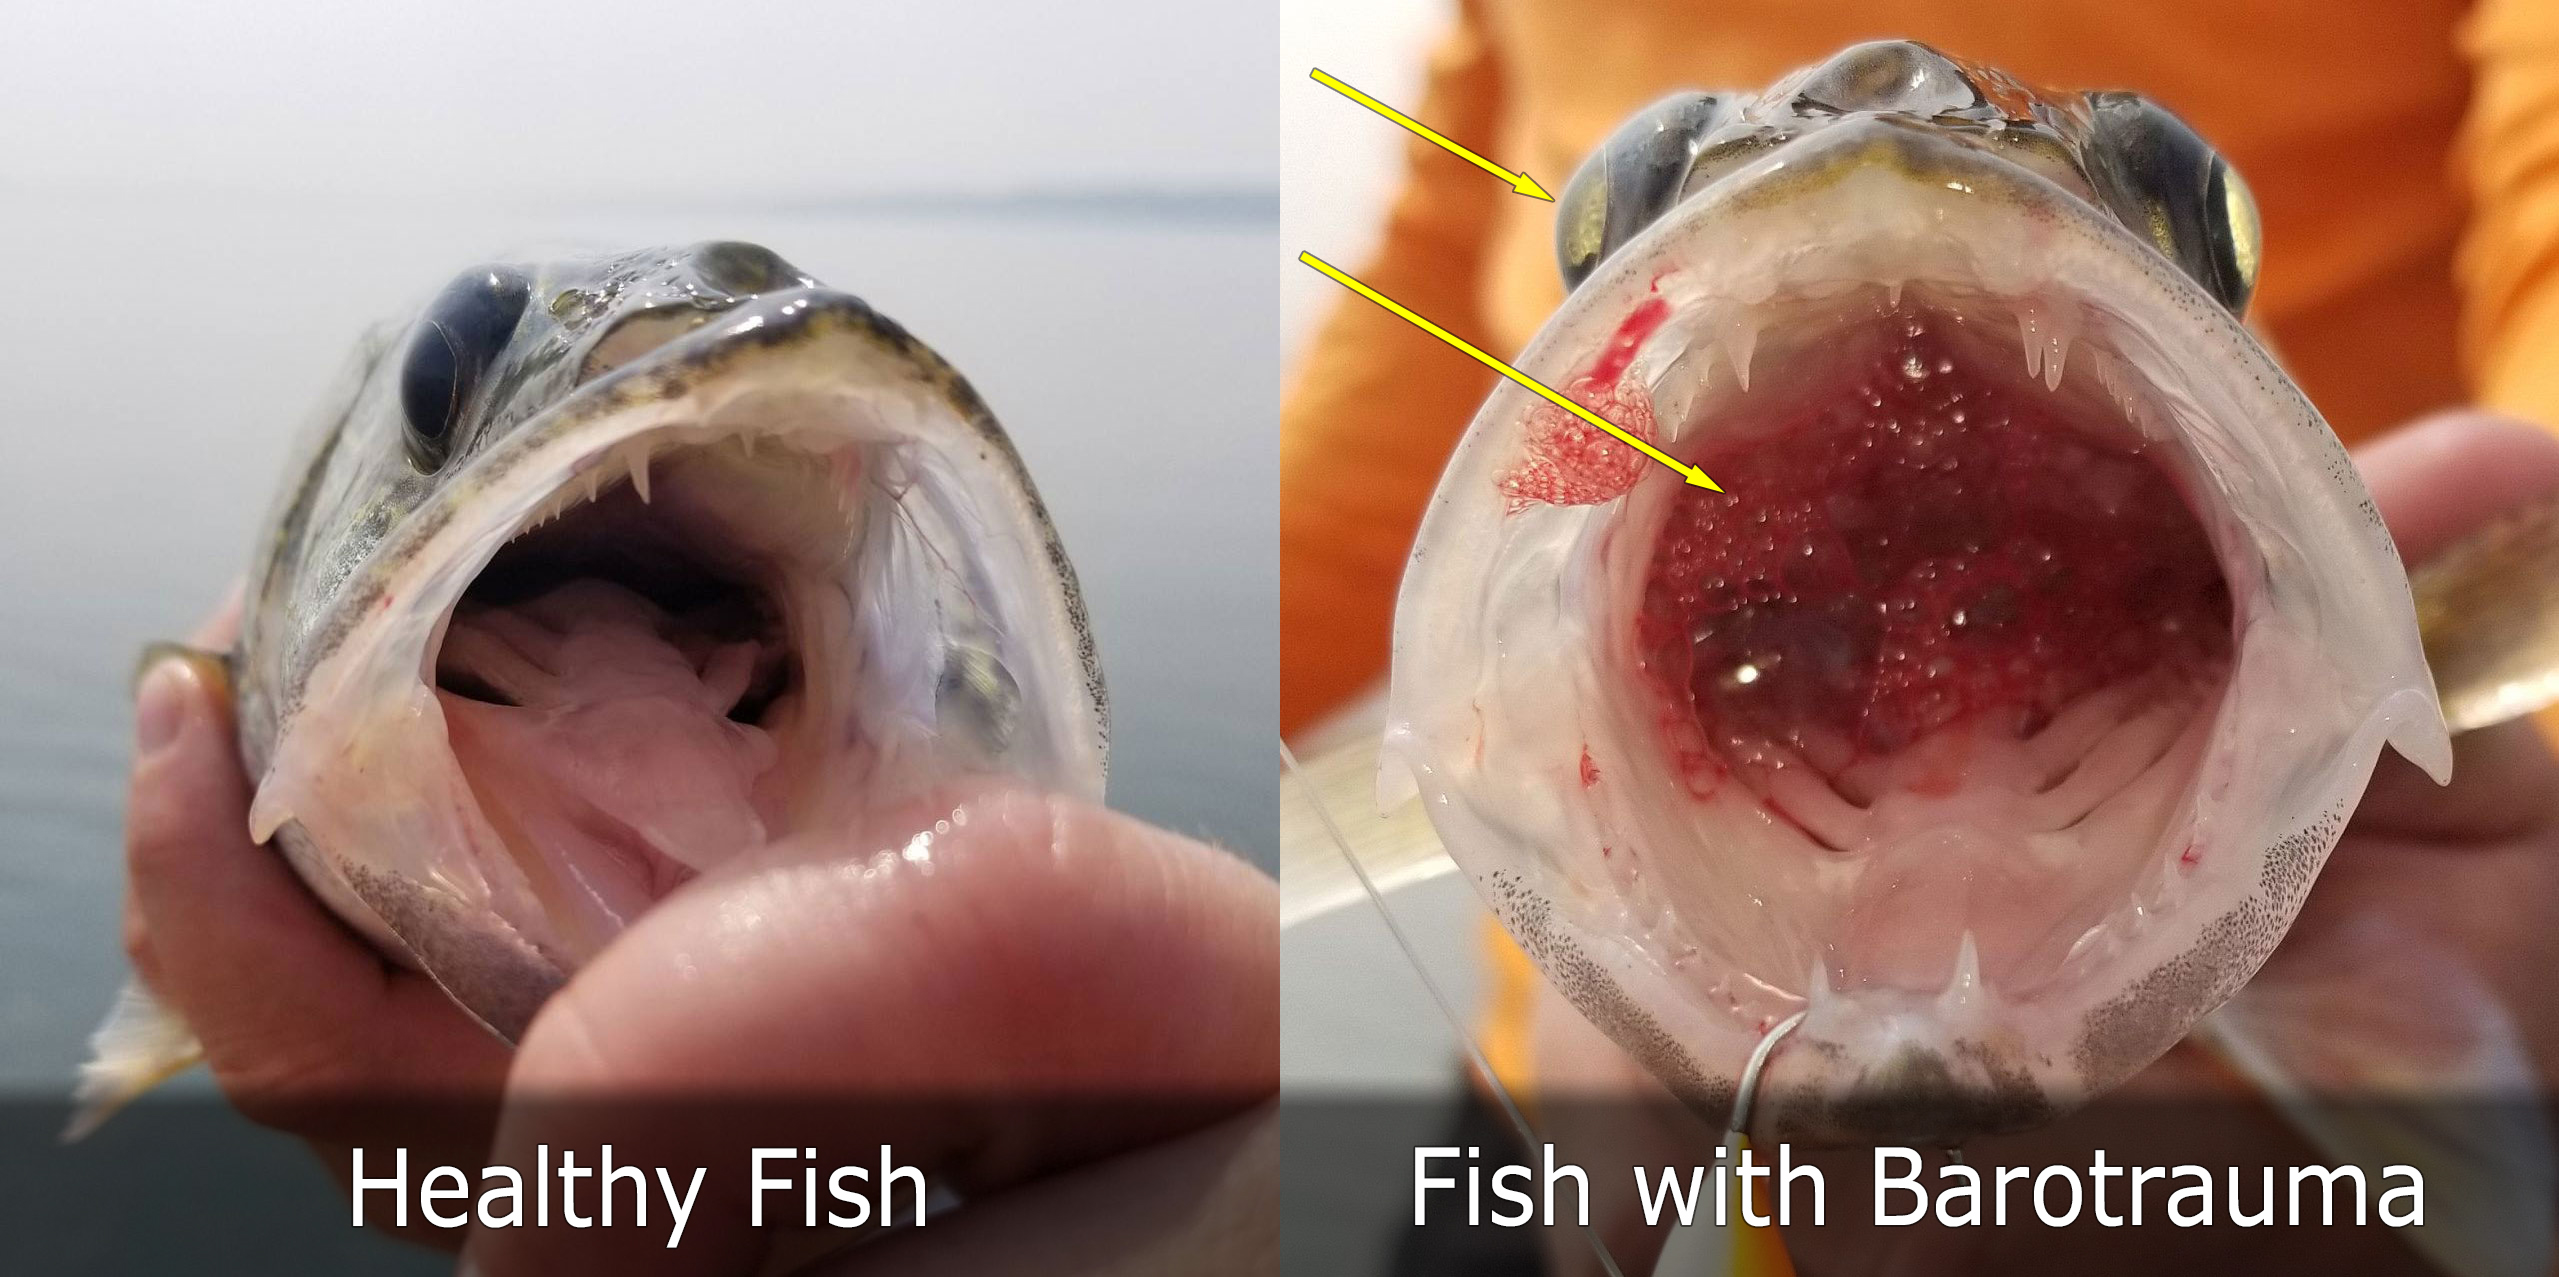 Healthy fish on left. Fish with barotrauma on right.